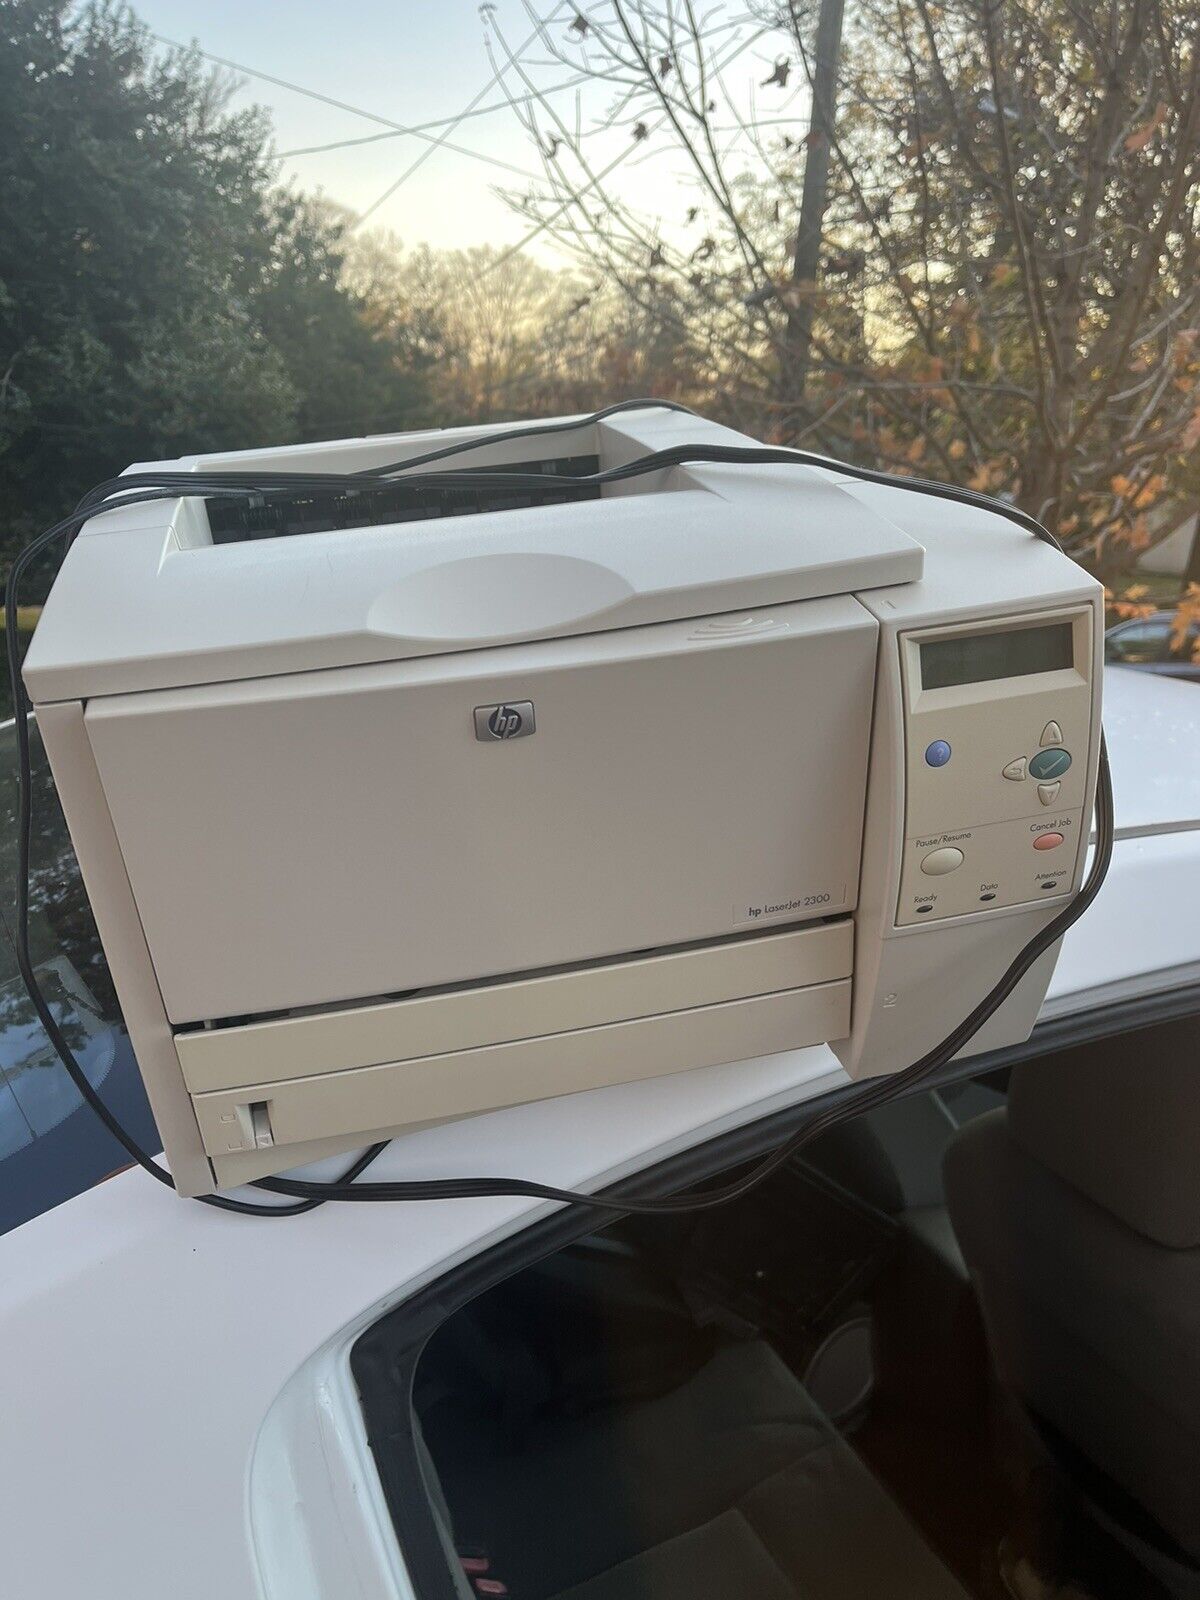 HP LaserJet 2300 Printer Used Working